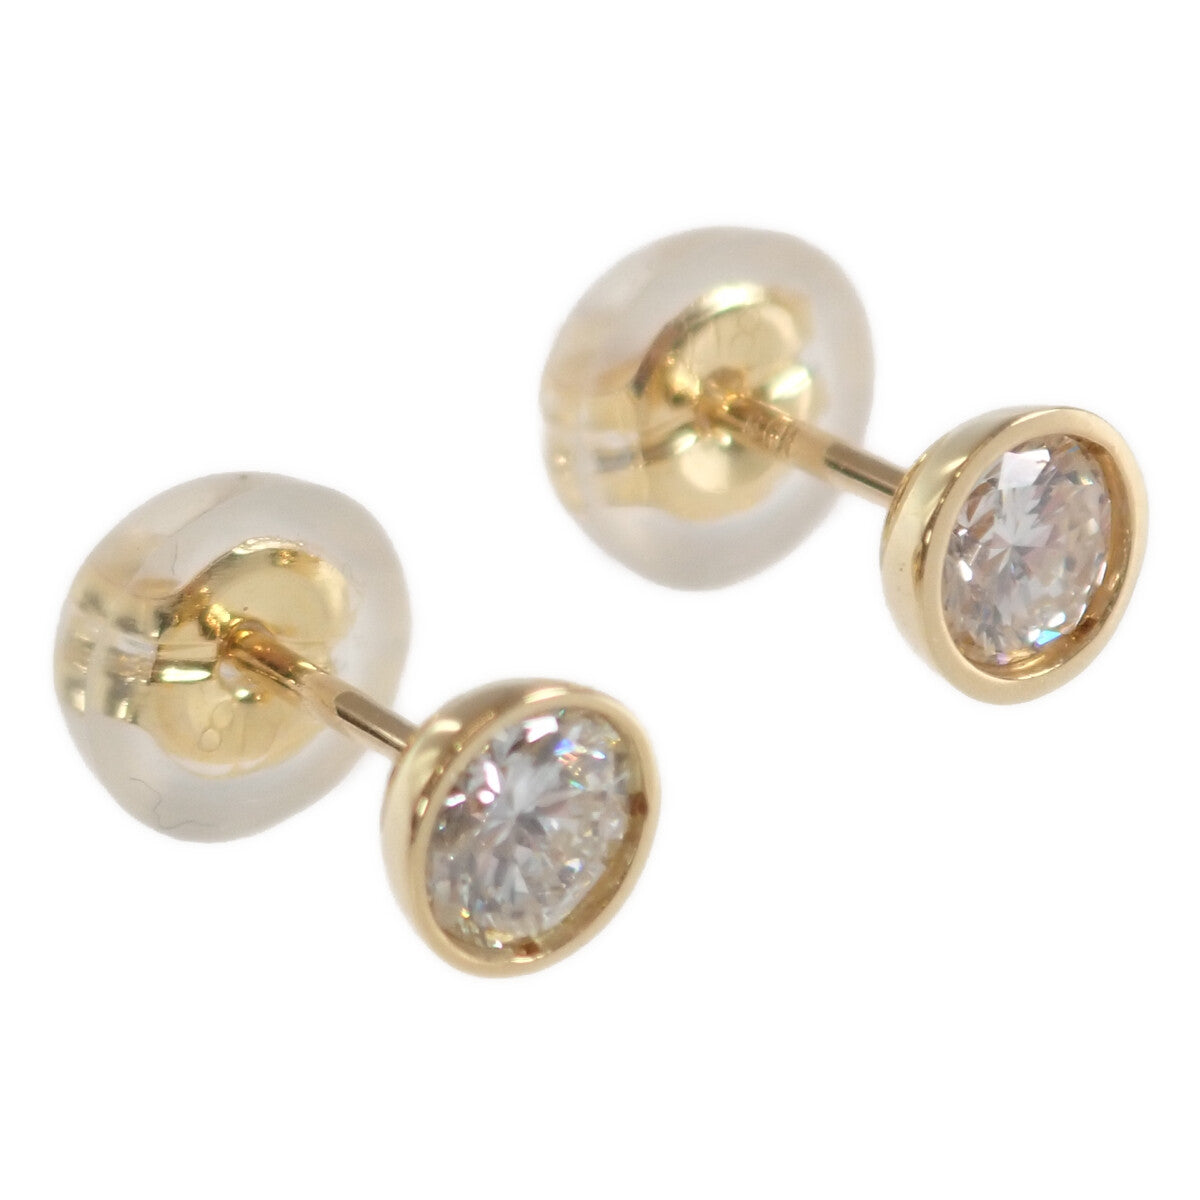 K18 Yellow Gold and Diamond Stud Earrings, Ladies', Diamond 0.157ct & 0.176ct, Preowned